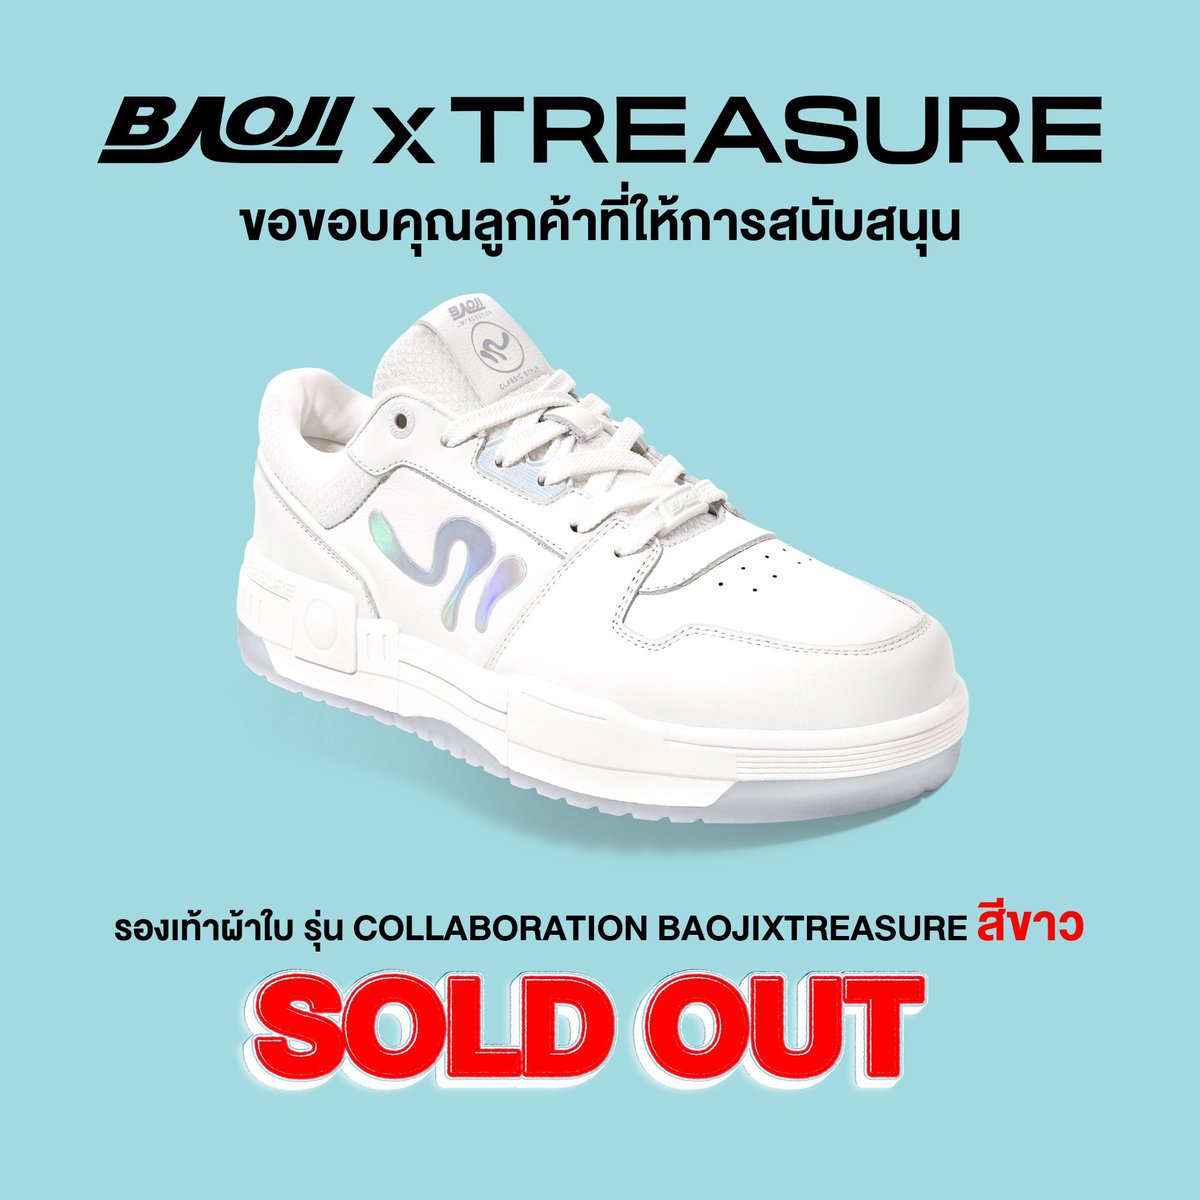 BAOJI ประกาศอย่างเป็นทางการ

รองเท้ารุ่น Collaboration #BAOJI x #TREASURE สีขาว ⚪️ SOLD OUT ทุกช่องทางแล้วค่ะ ✨

#BAOJIxTREASURE #สมบัติของบาโอจิ